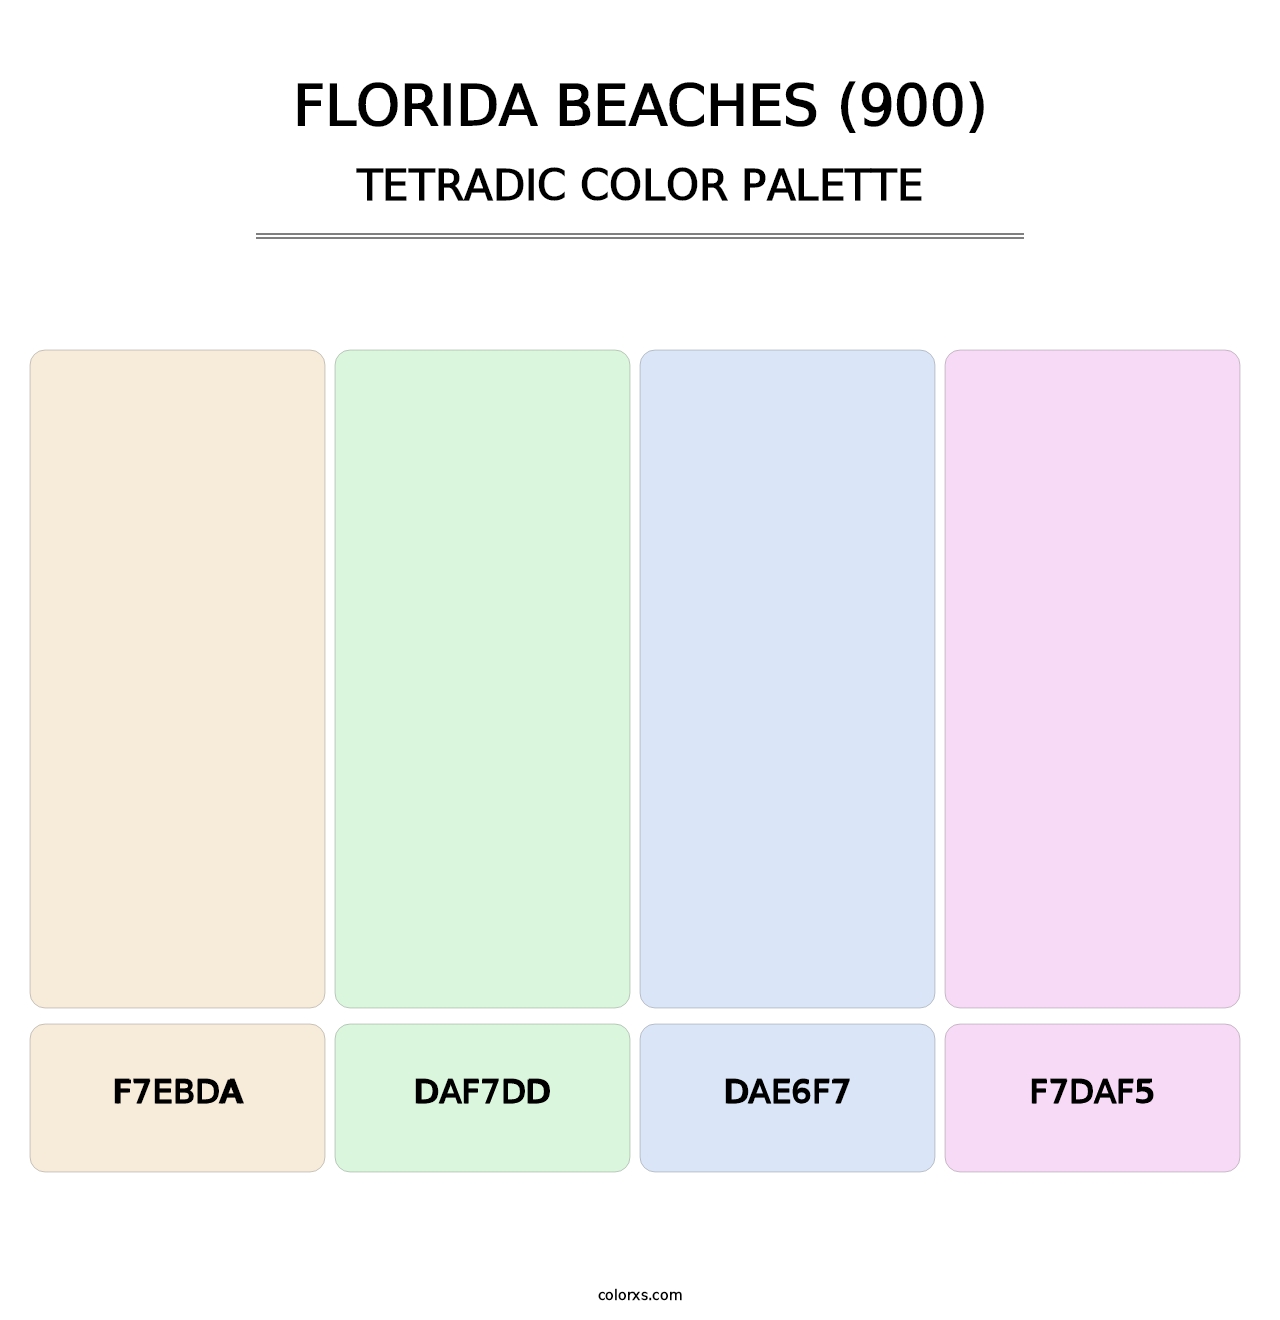 Florida Beaches (900) - Tetradic Color Palette